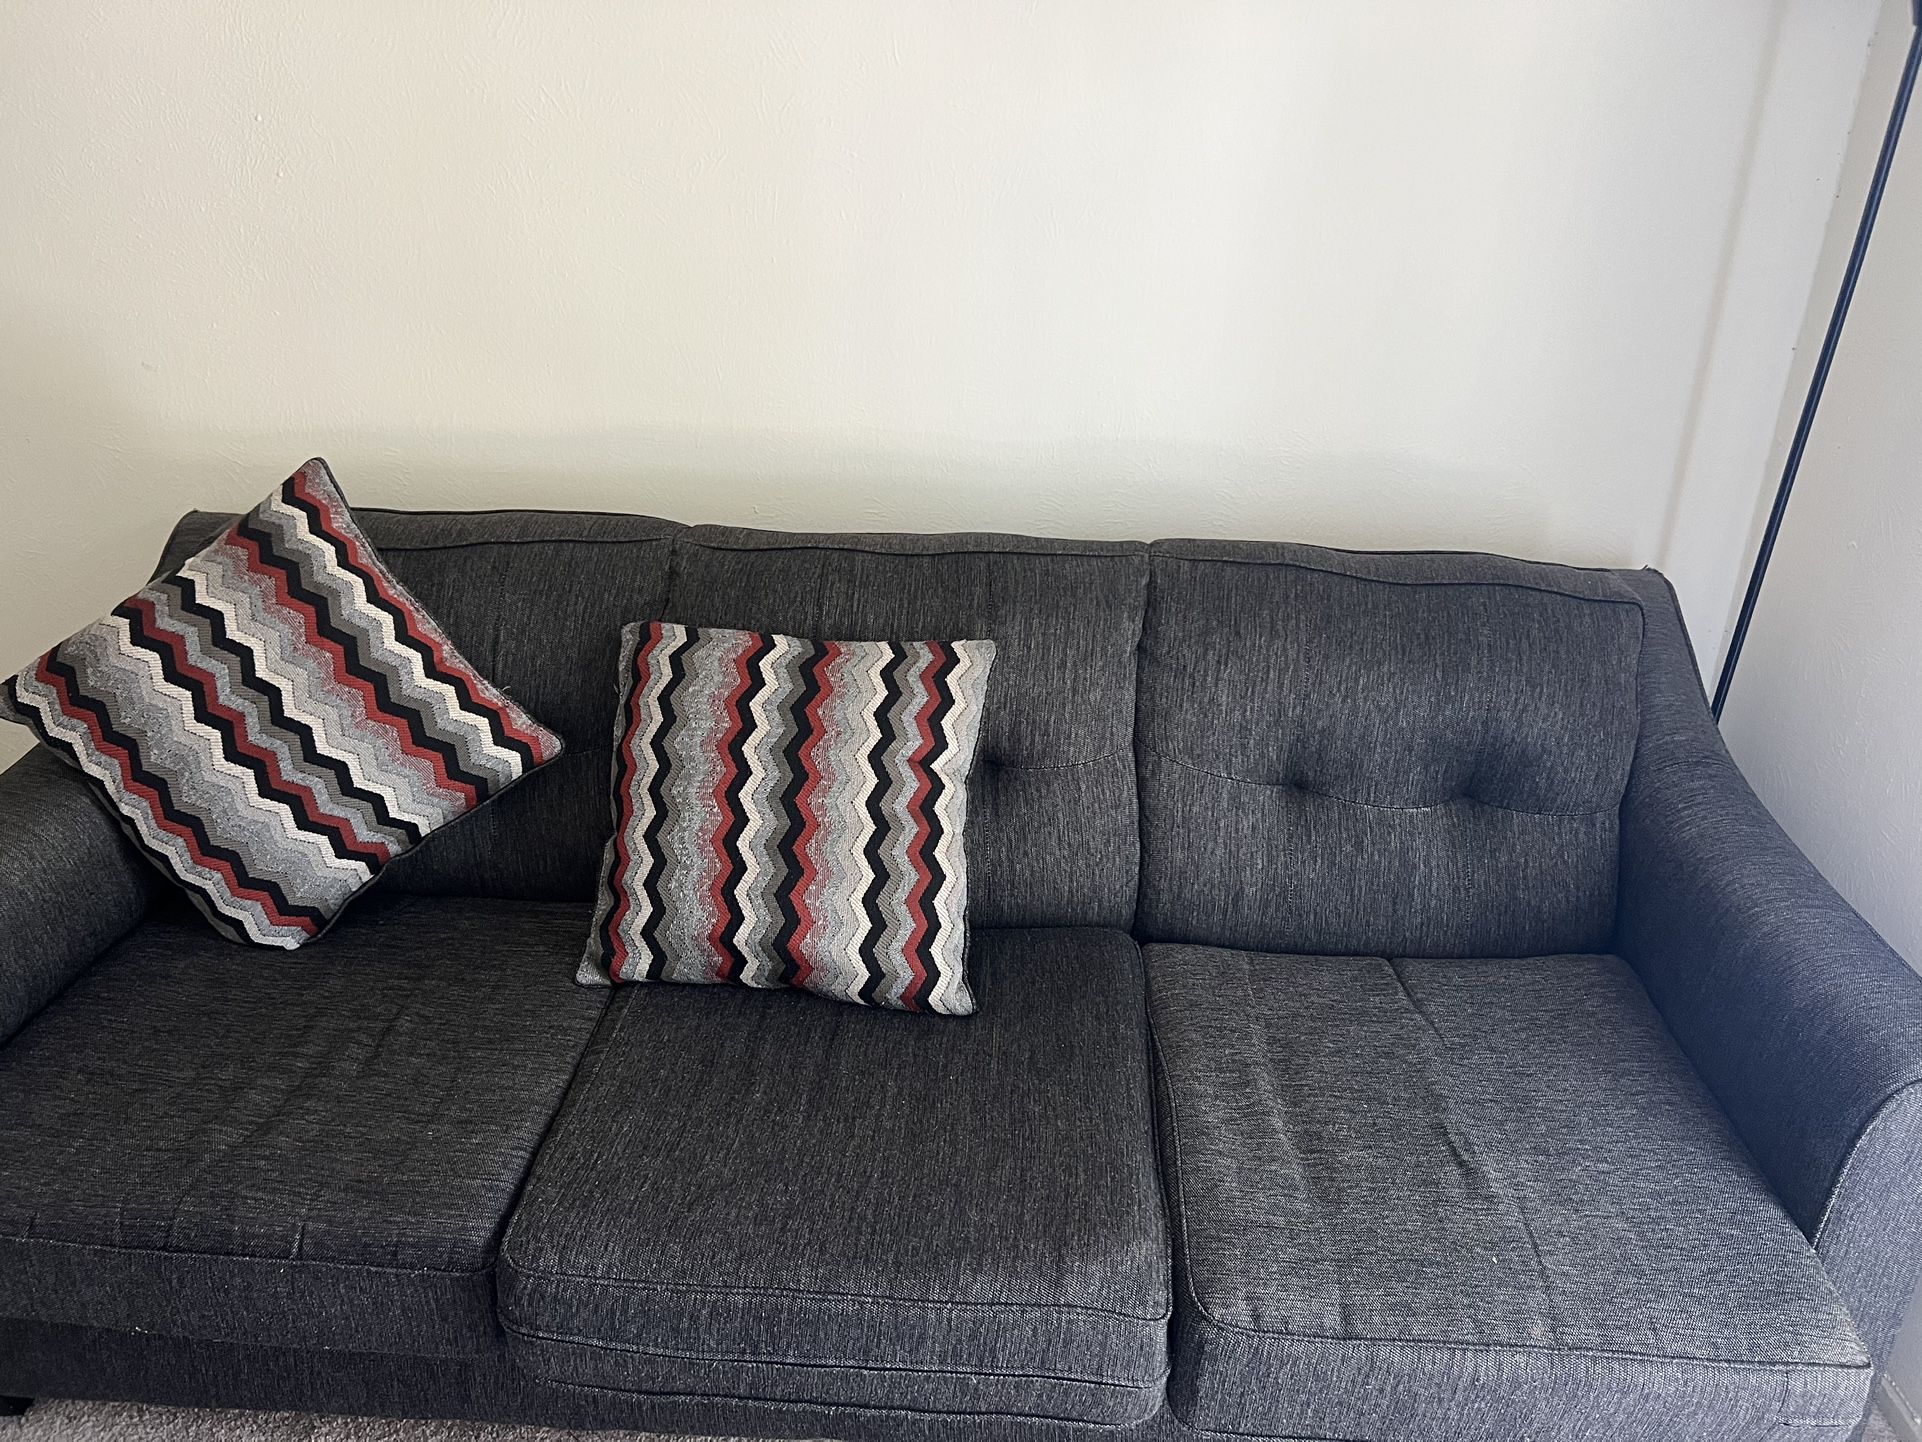 Sofa For Sale In DALLAS NEEDS TO GO ASAP